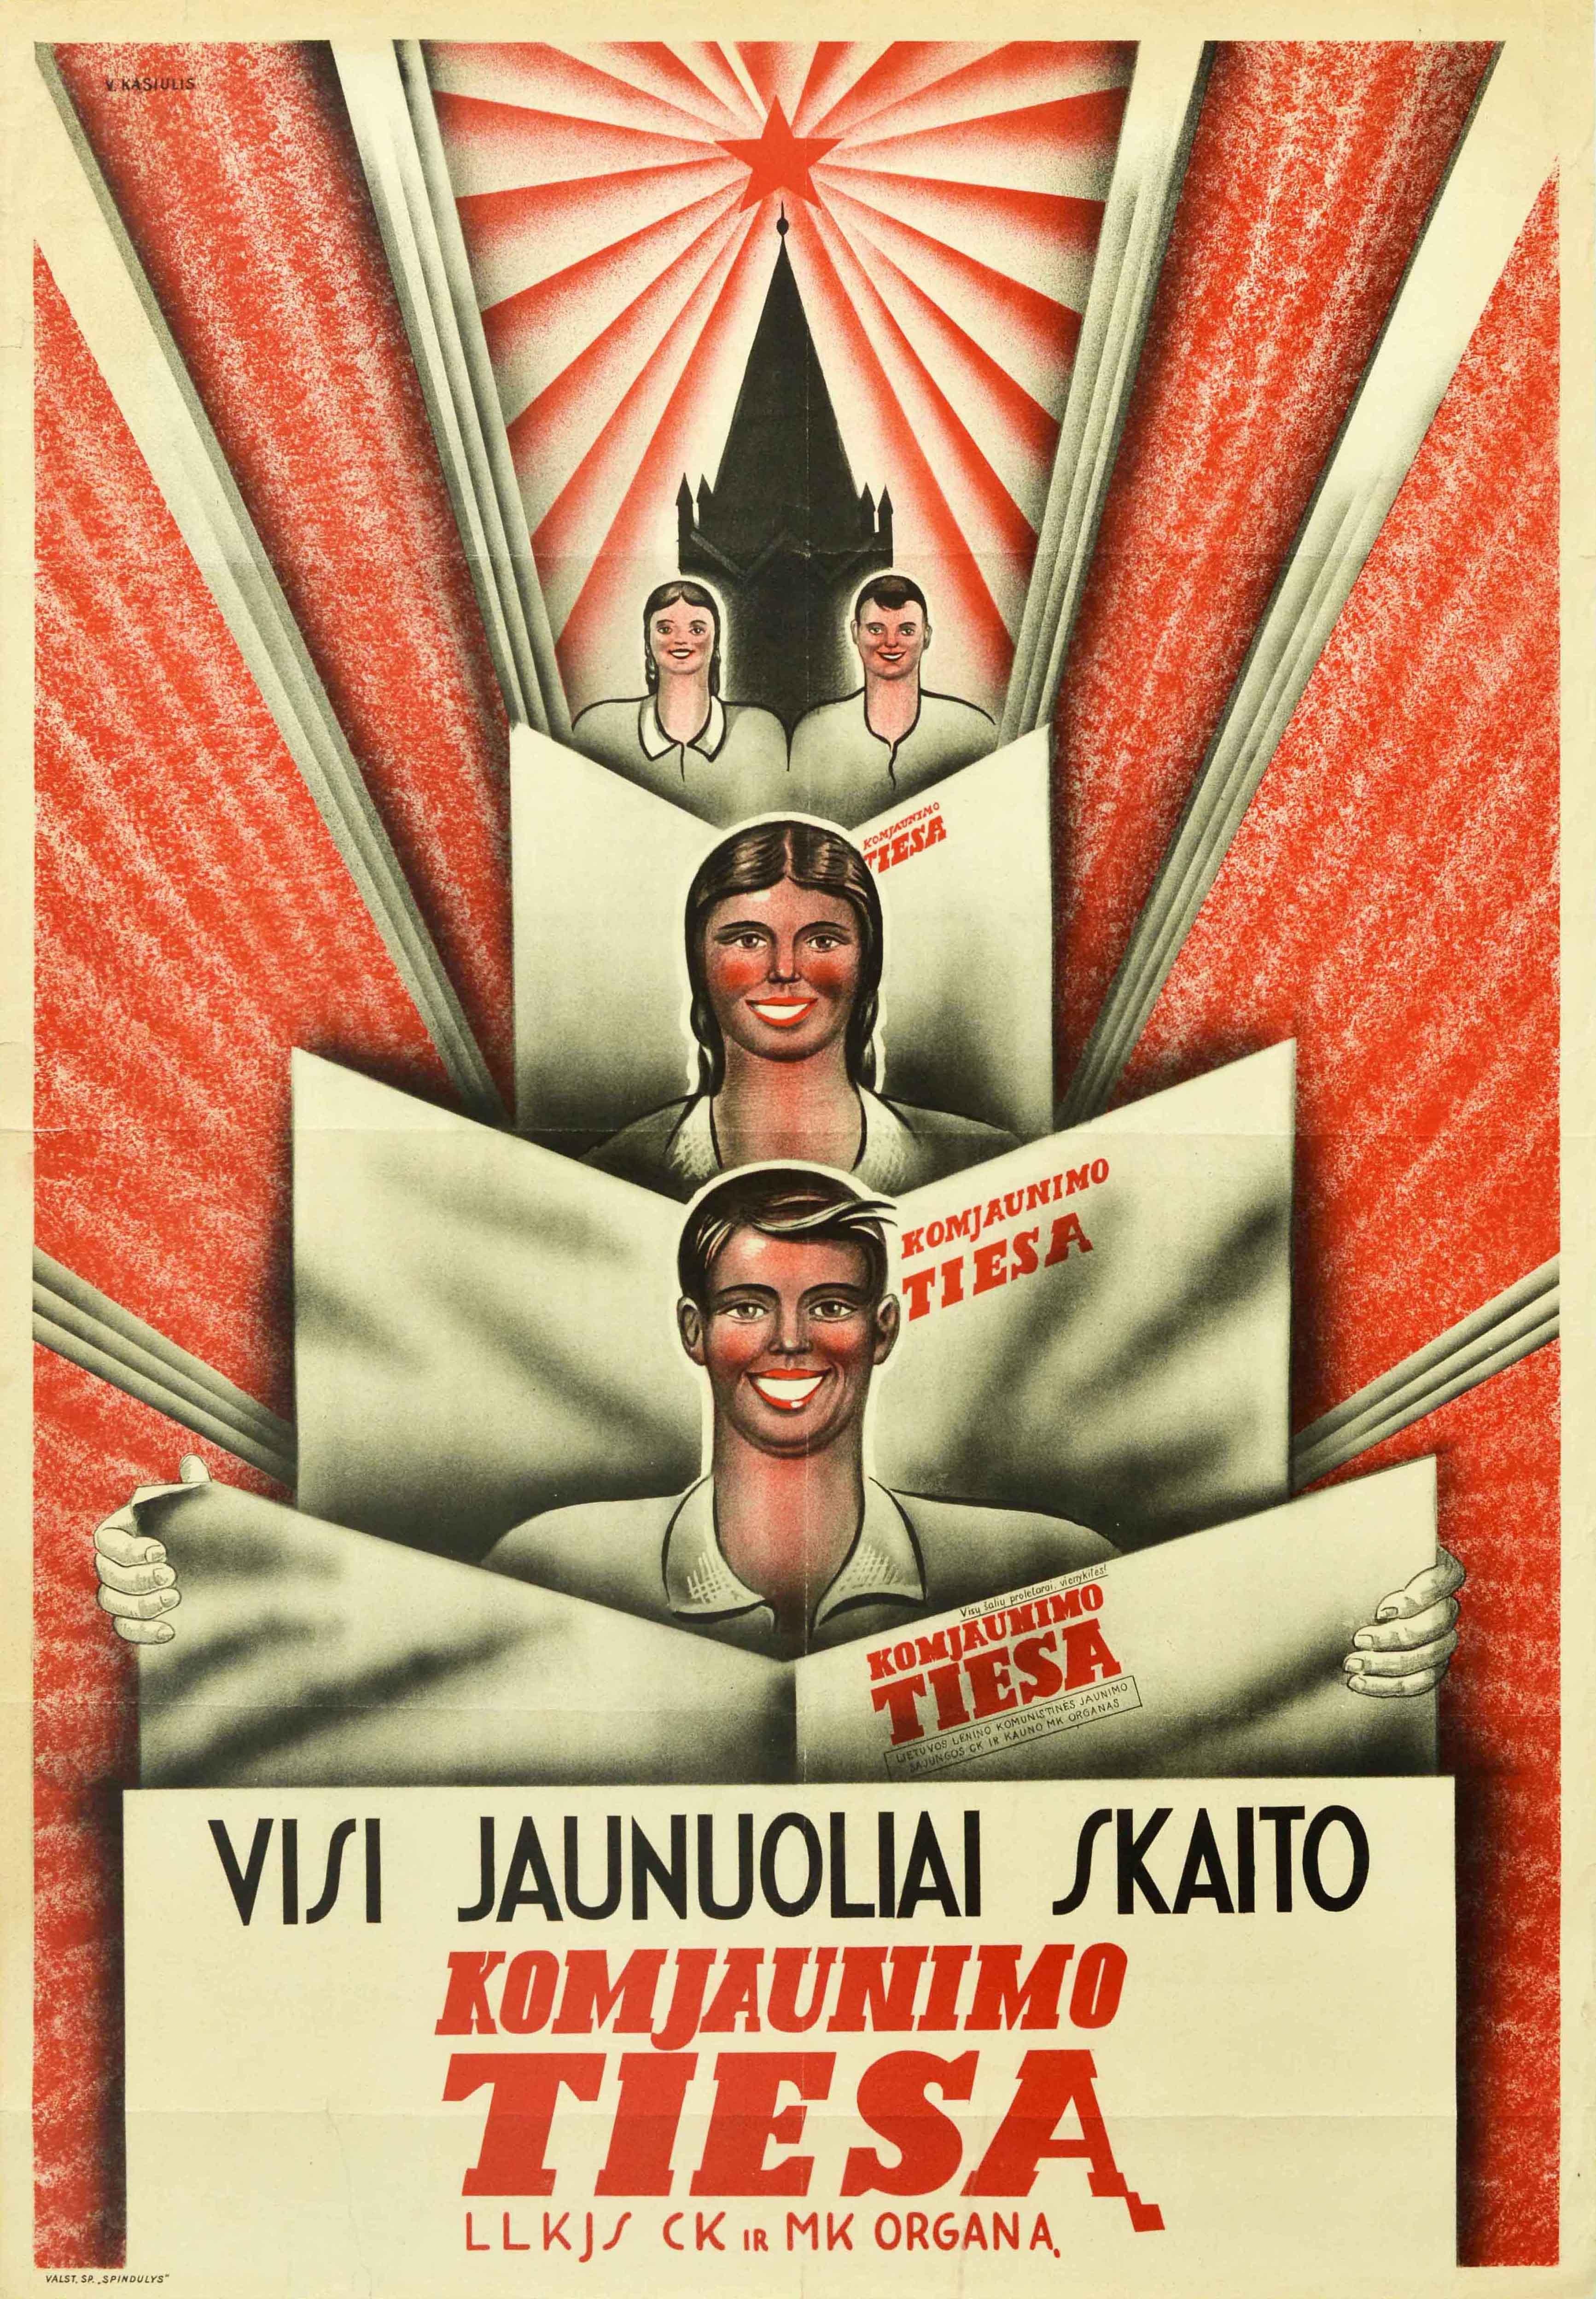 Vytautas Kasiulis Print - Original Vintage Poster Komjaunimo Tiesa Communist Youth Newspaper Lenin Truth 